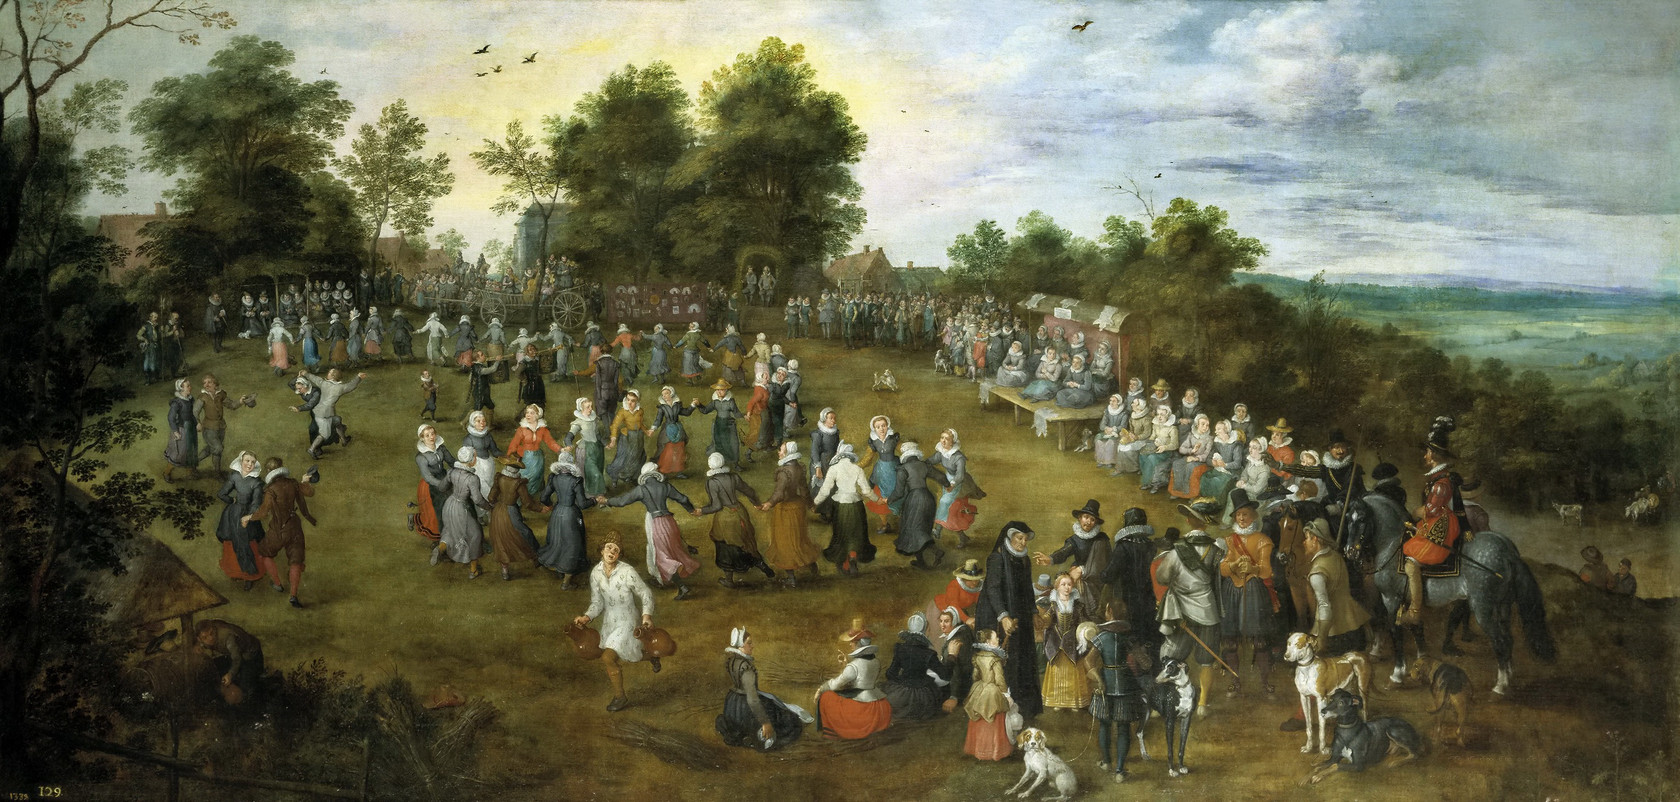 Картина Деревенские танцы перед эрцгерцогами, 1623 - Музей Прадо